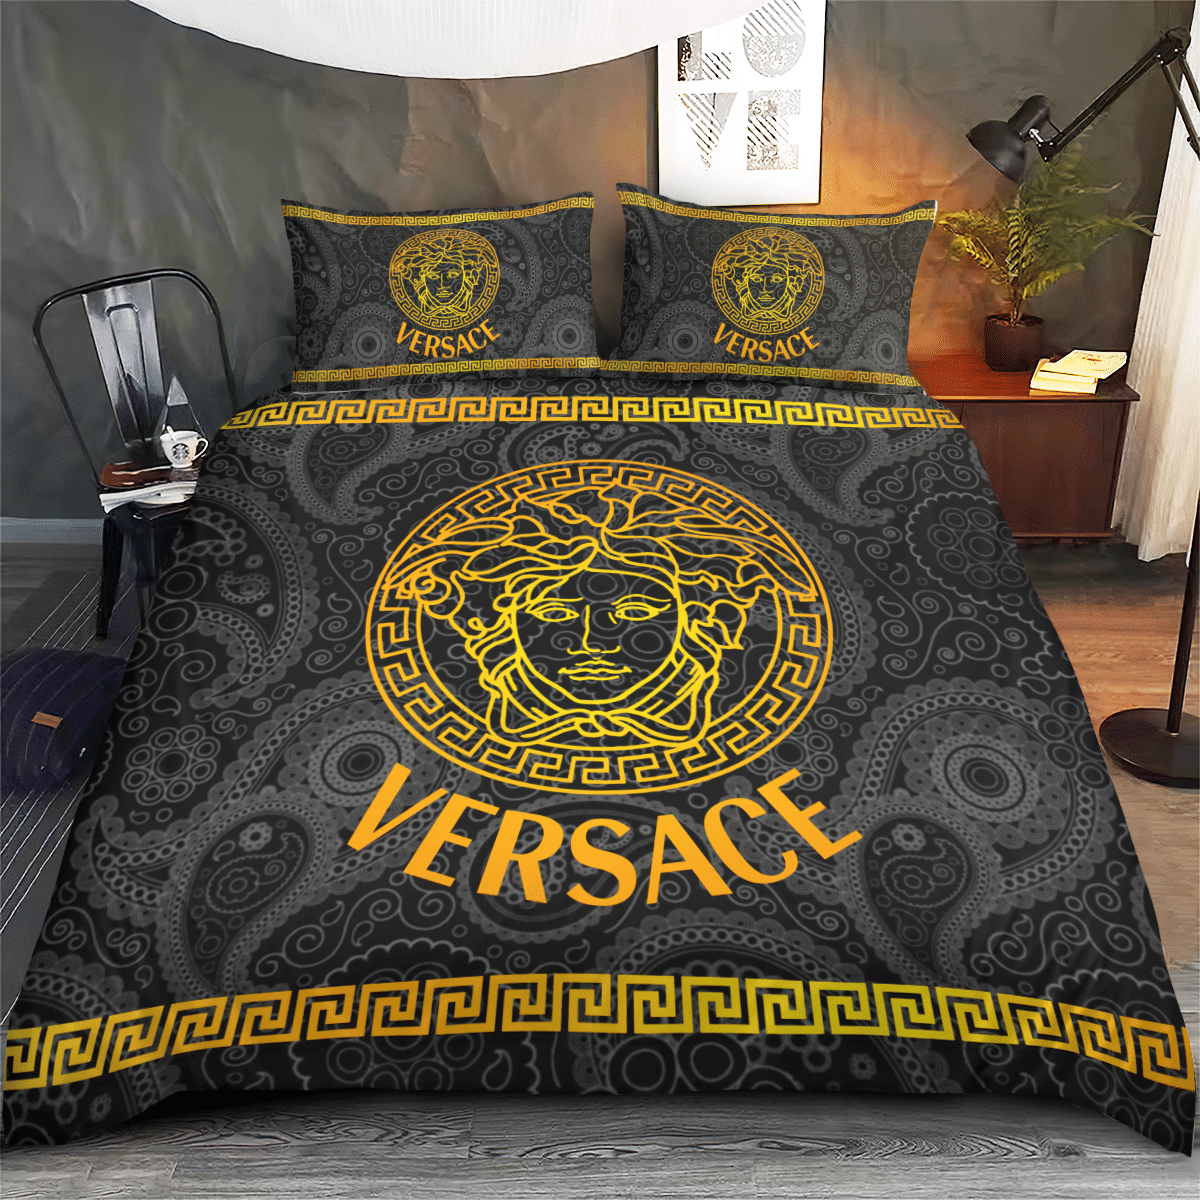 Versace Bedding Sets 13